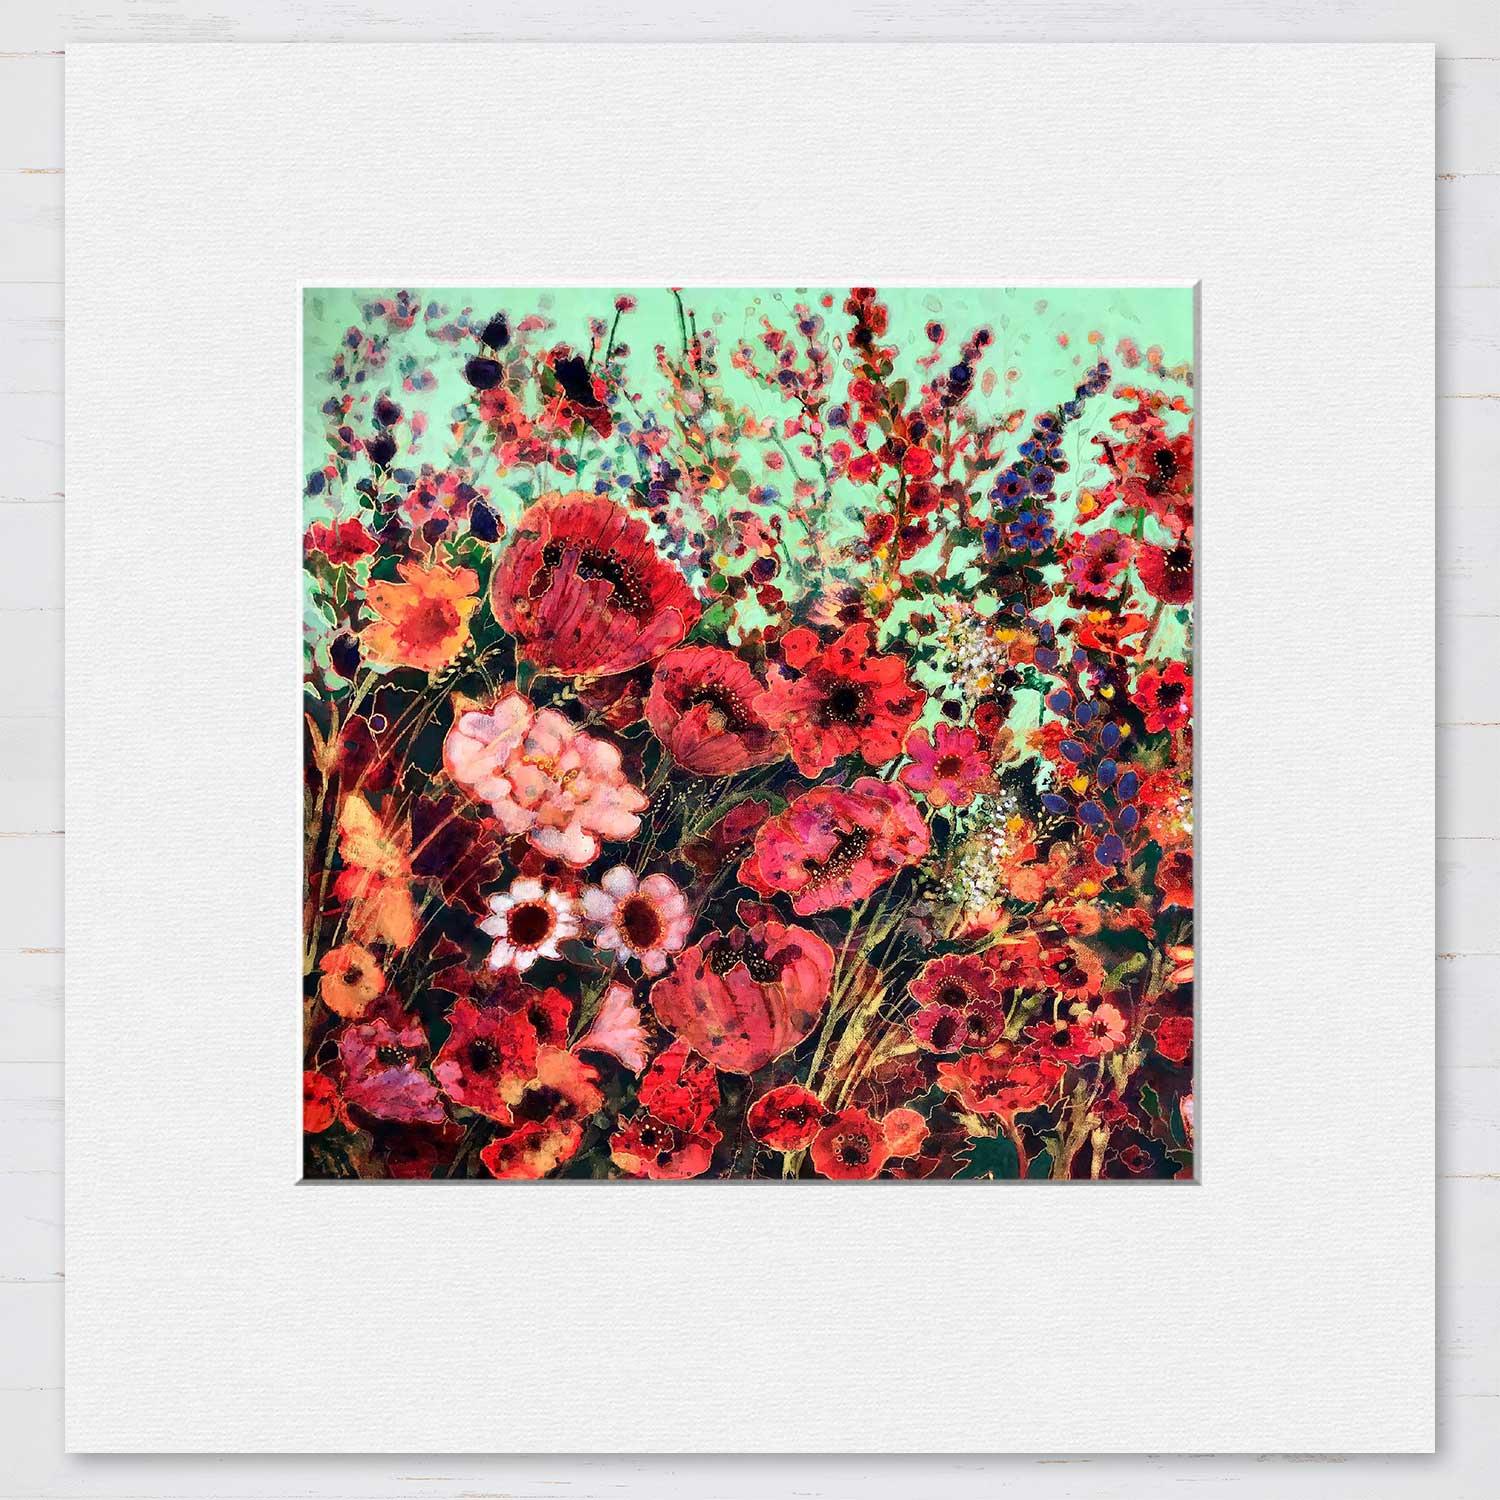 Abundant Blooms Mounted Card from an original painting by artist Keli Clark